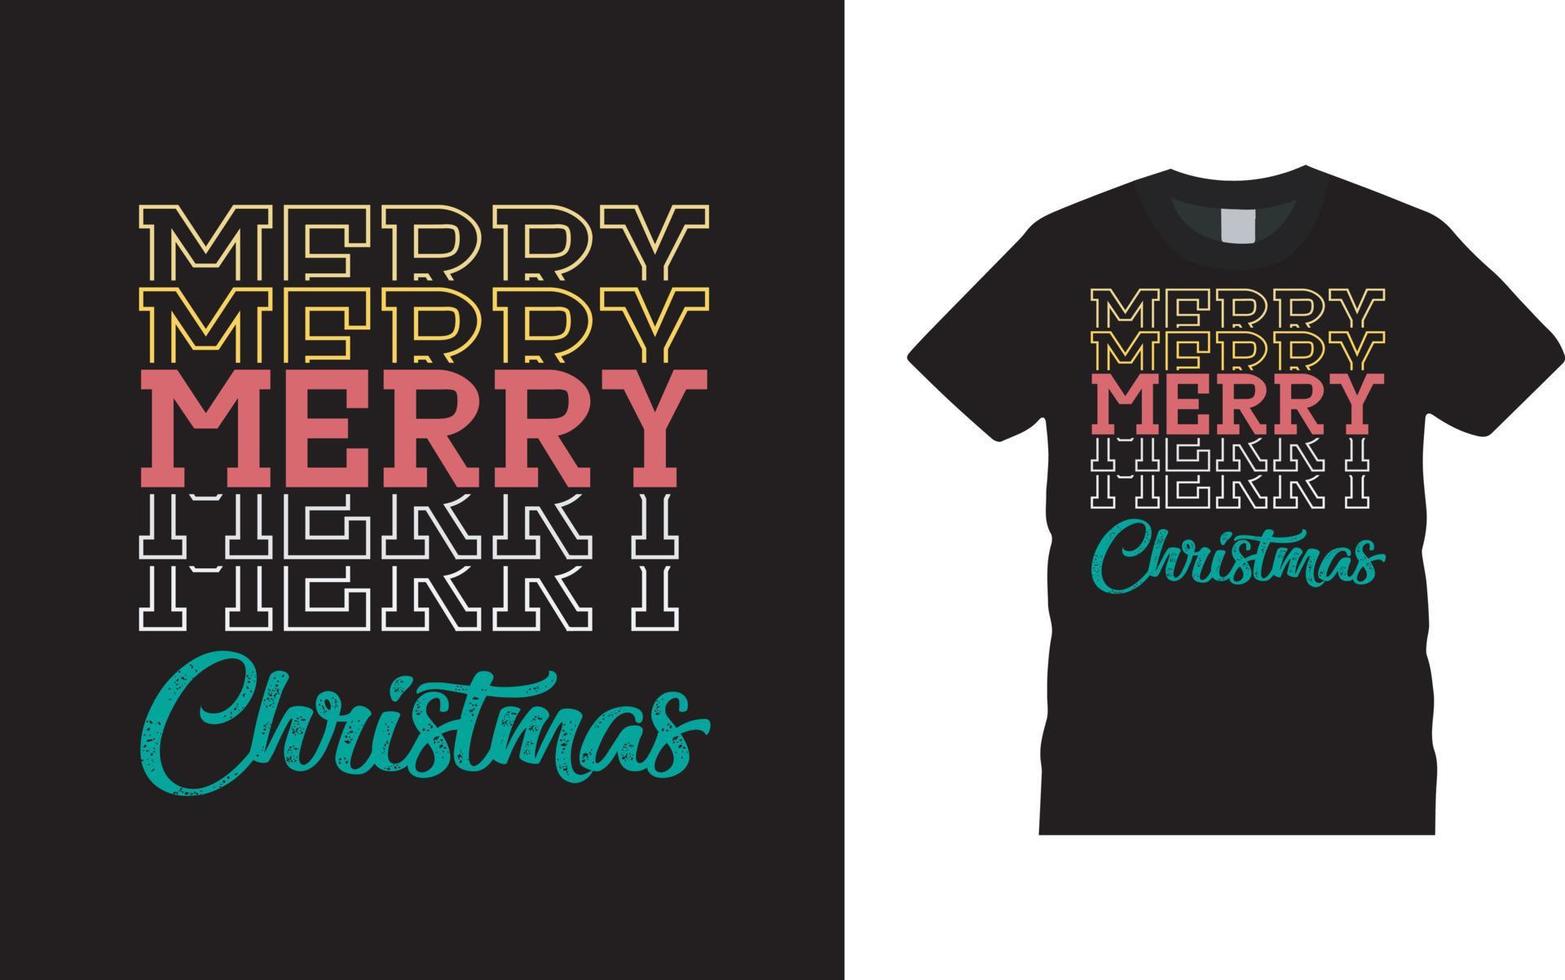 Merry Christmas T shirt Design vector